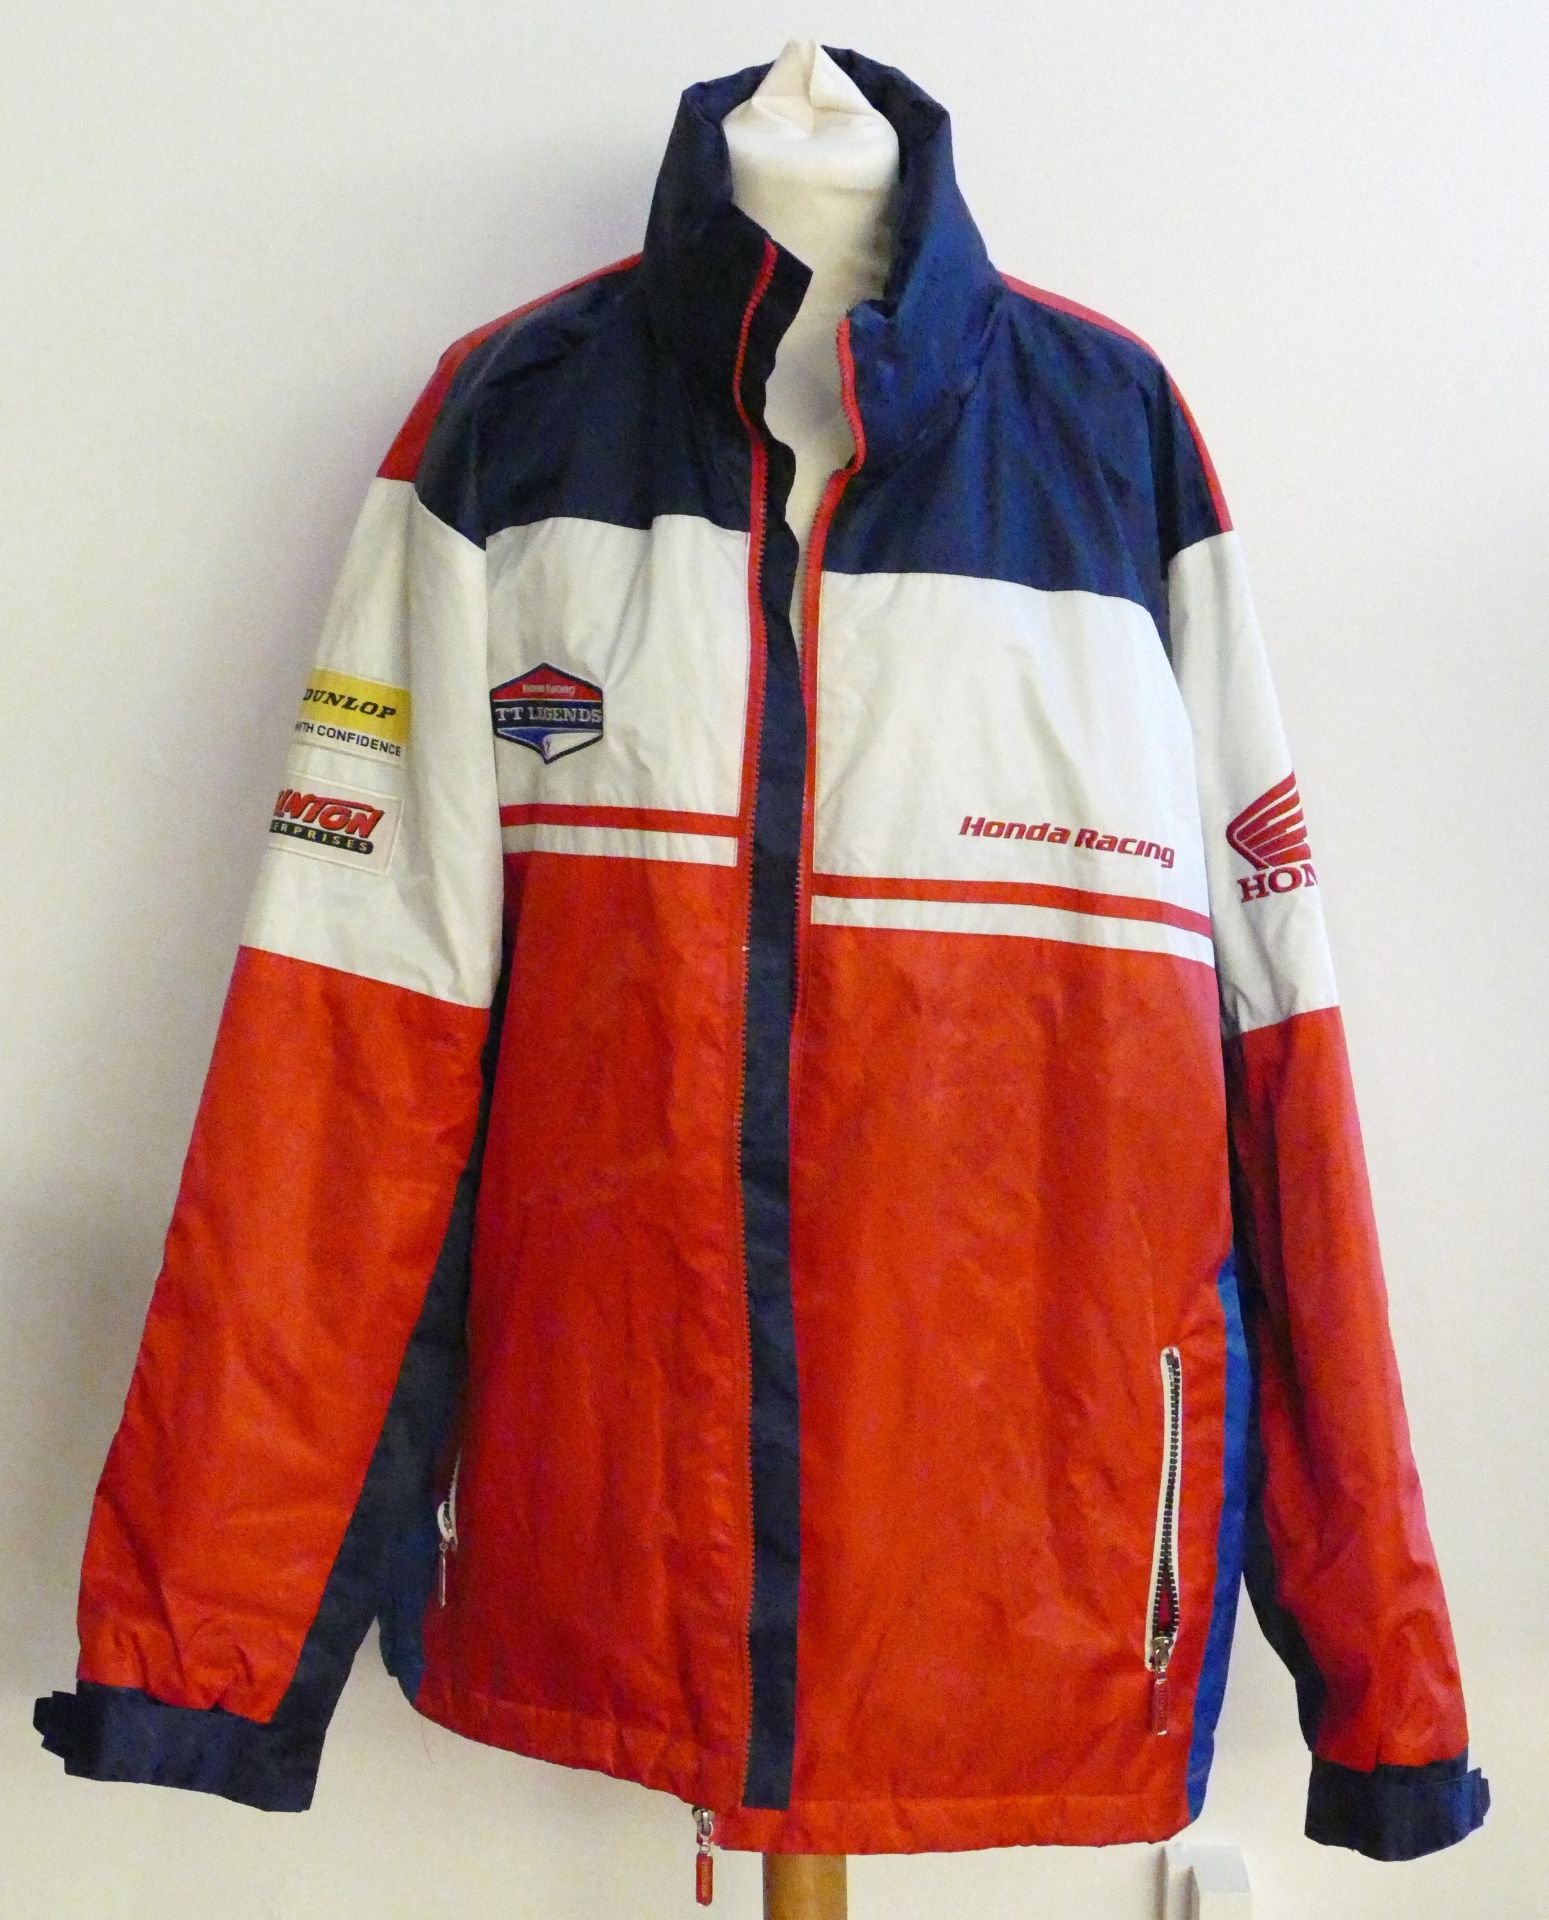 A 20th century extra extra large (XXL) gentlemens TT Legends Honda Racing waterproof jacket